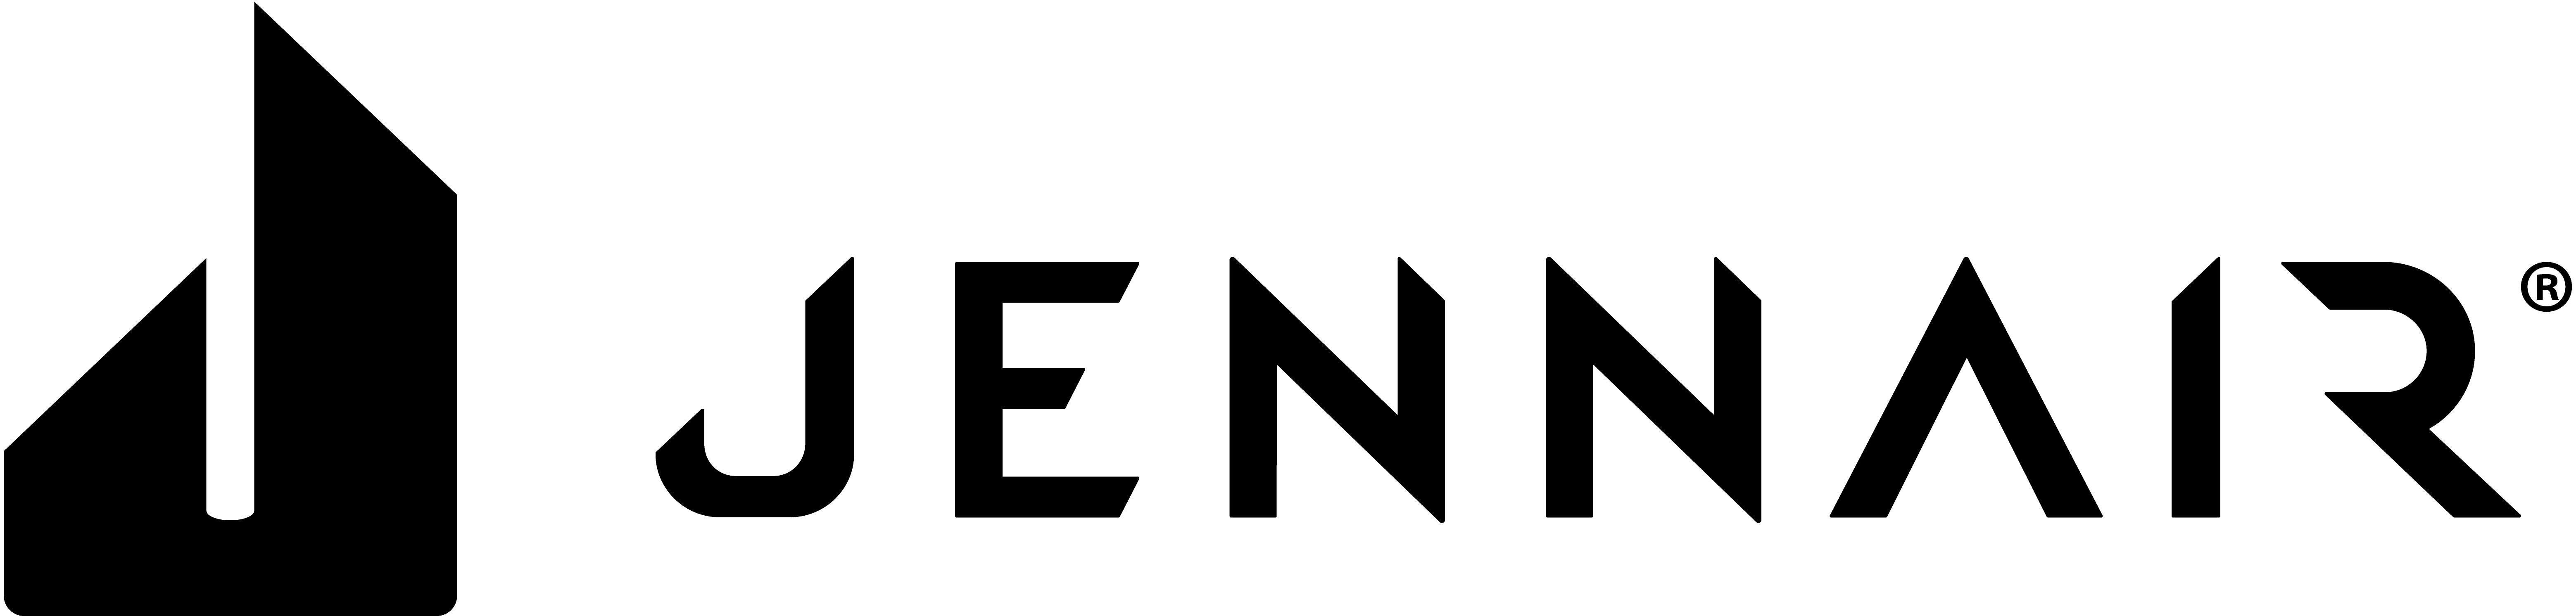 JennAir-Brand-Logo-2018.png